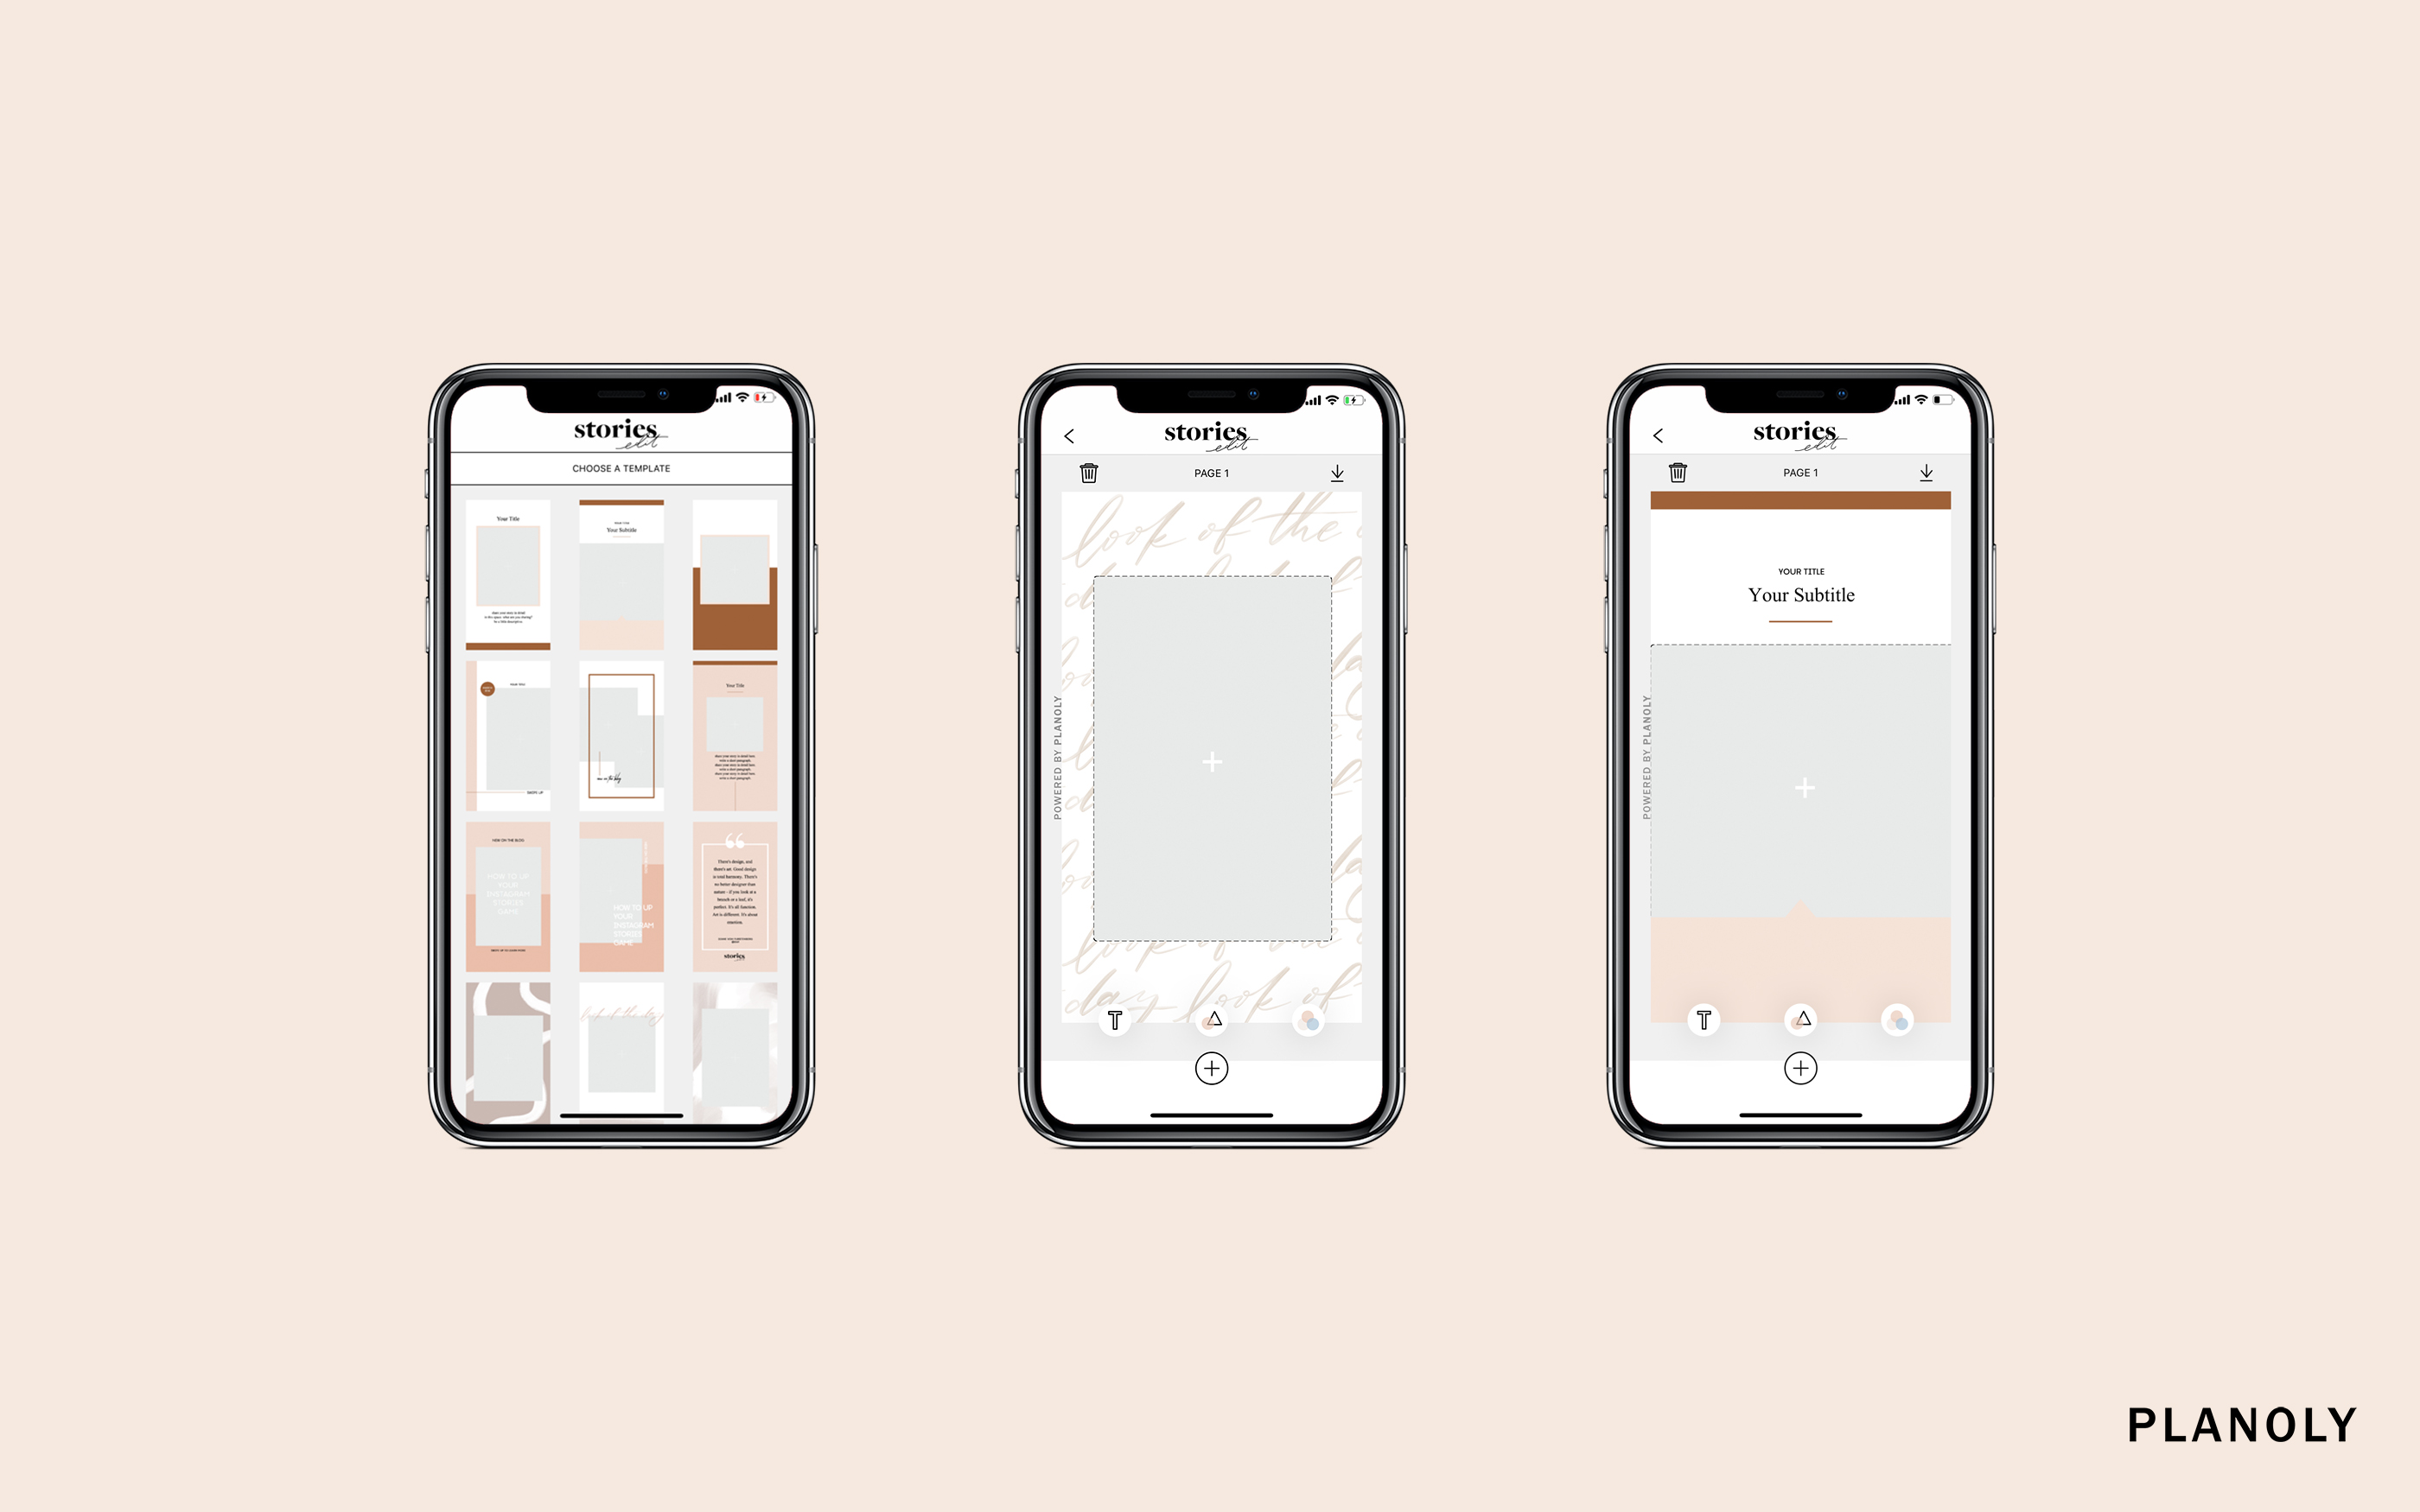 Introducing StoriesEdit: A Stories Design App